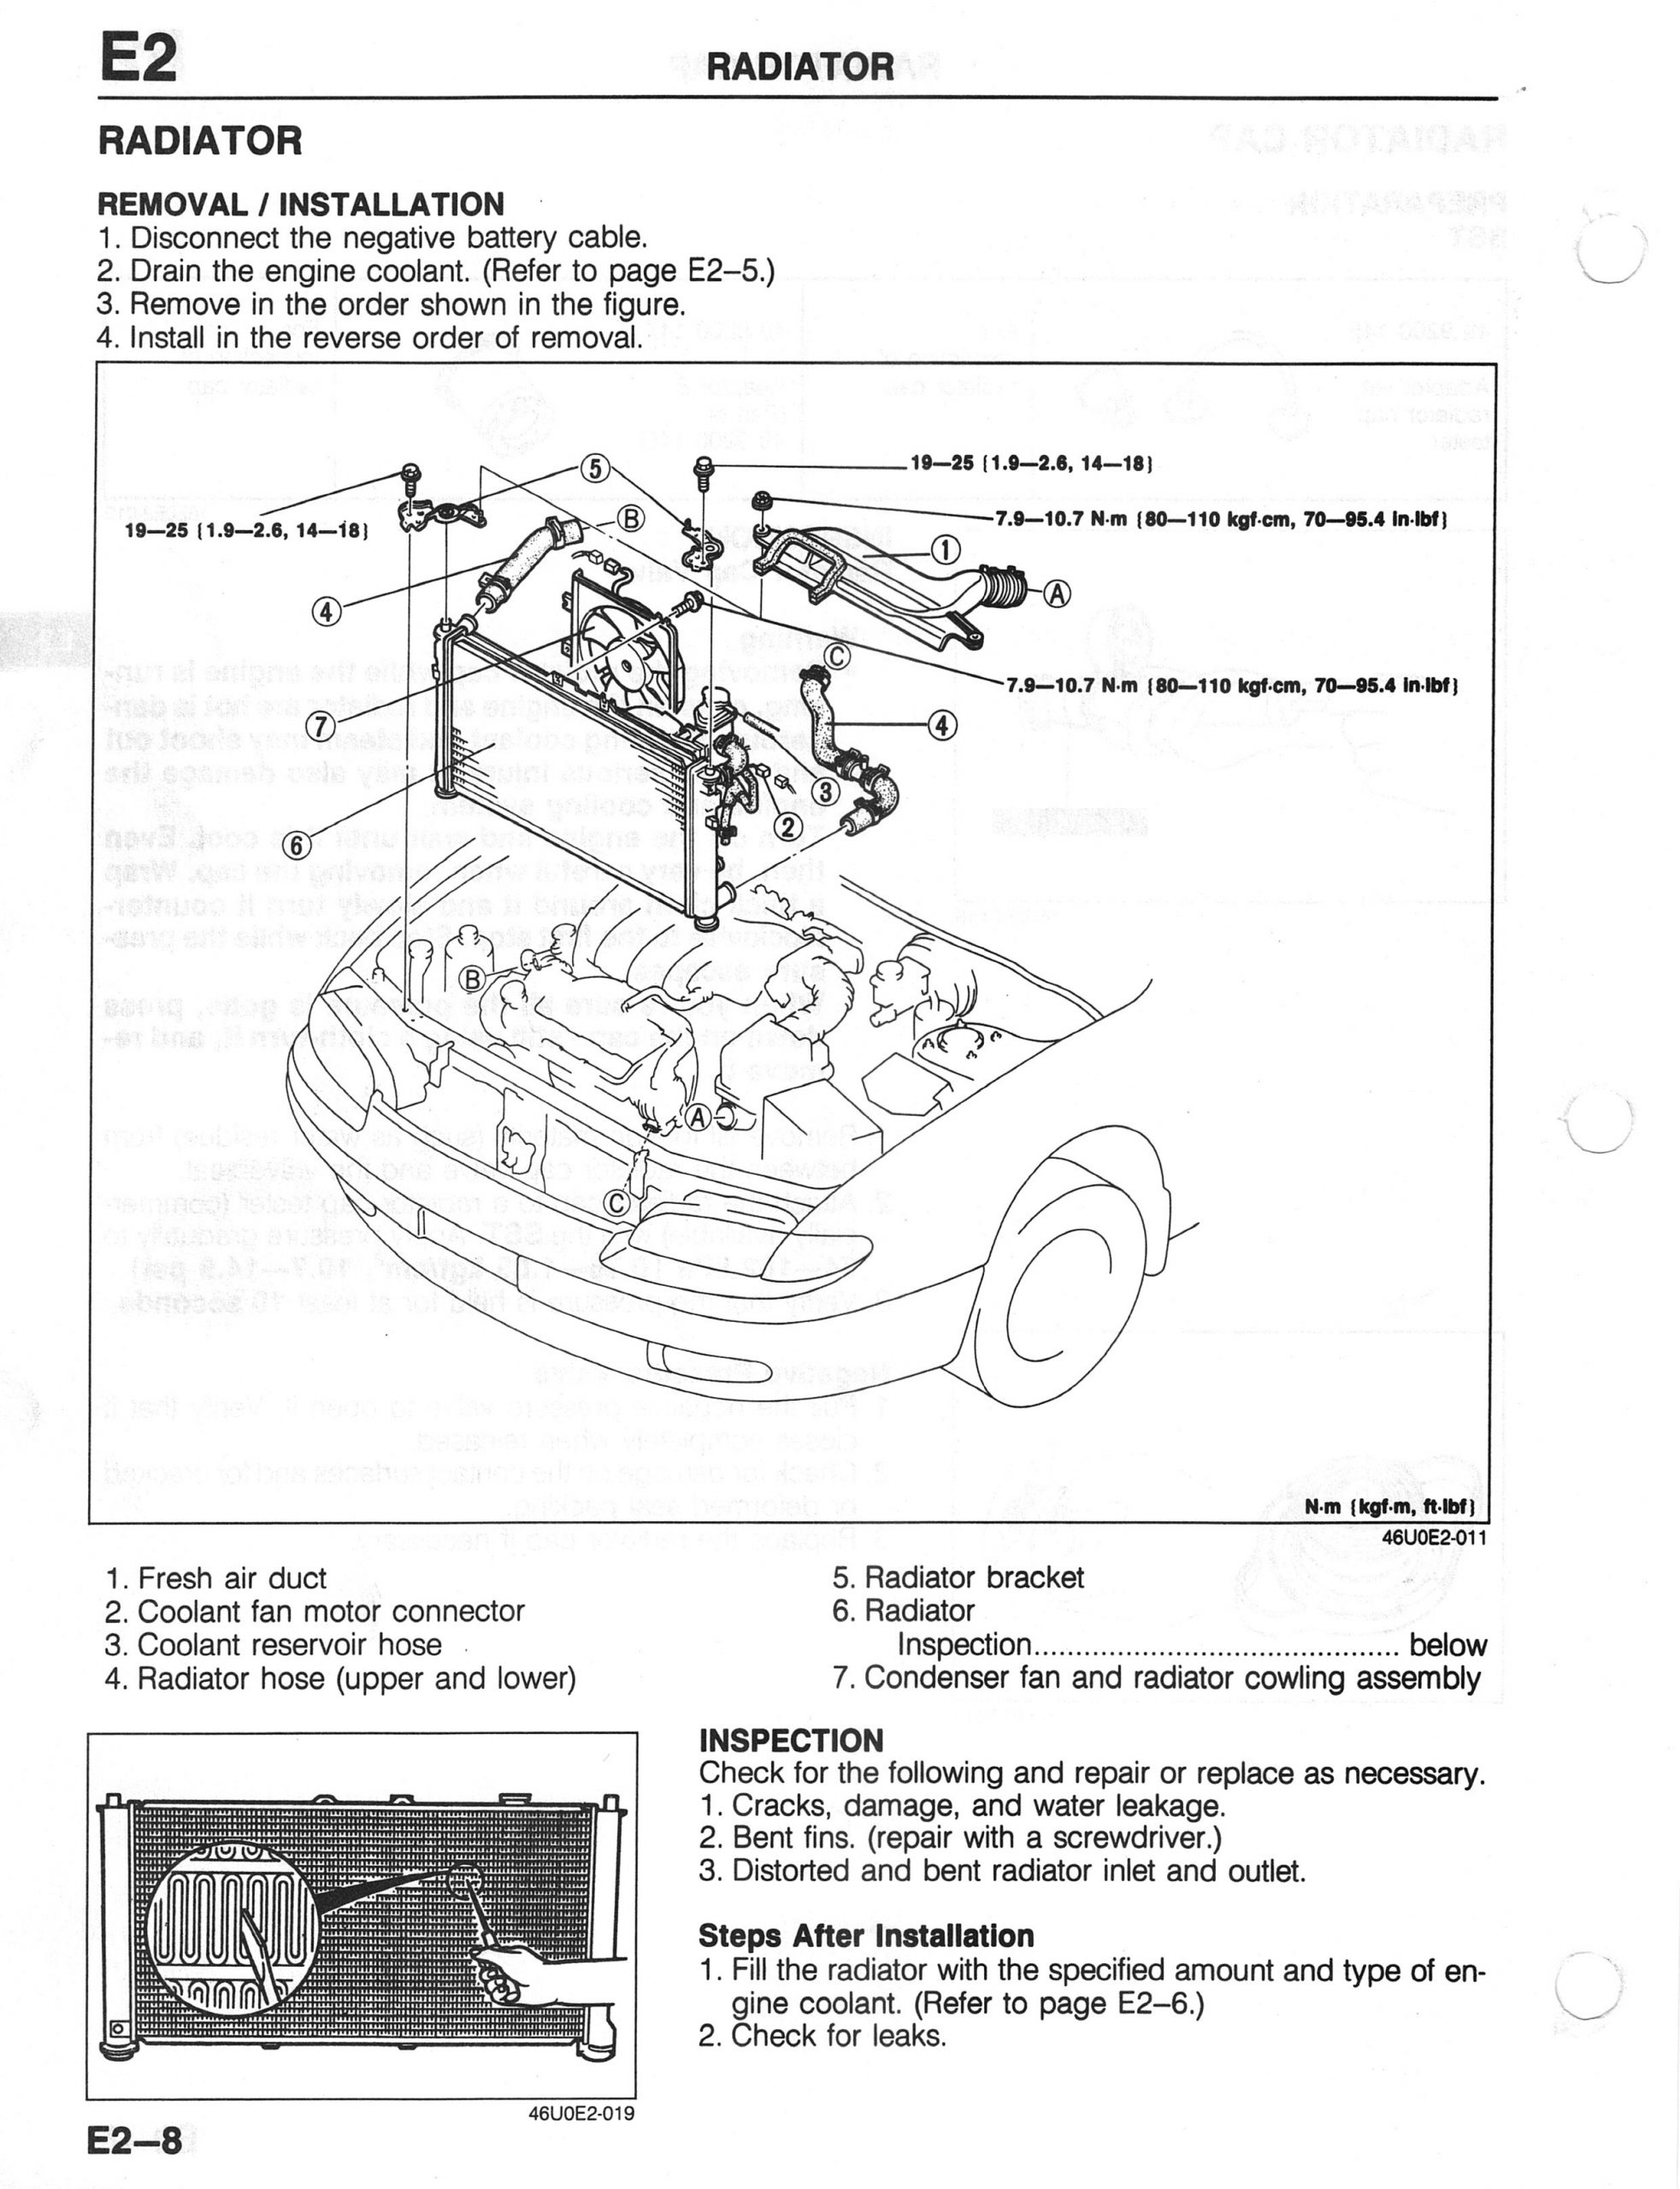 Vacuum Line Diagram 2002 Mazda Millinia Coolant Hose Question – 1993-2002 (2.5l) V6 – Mazda626.net forums Of Vacuum Line Diagram 2002 Mazda Millinia